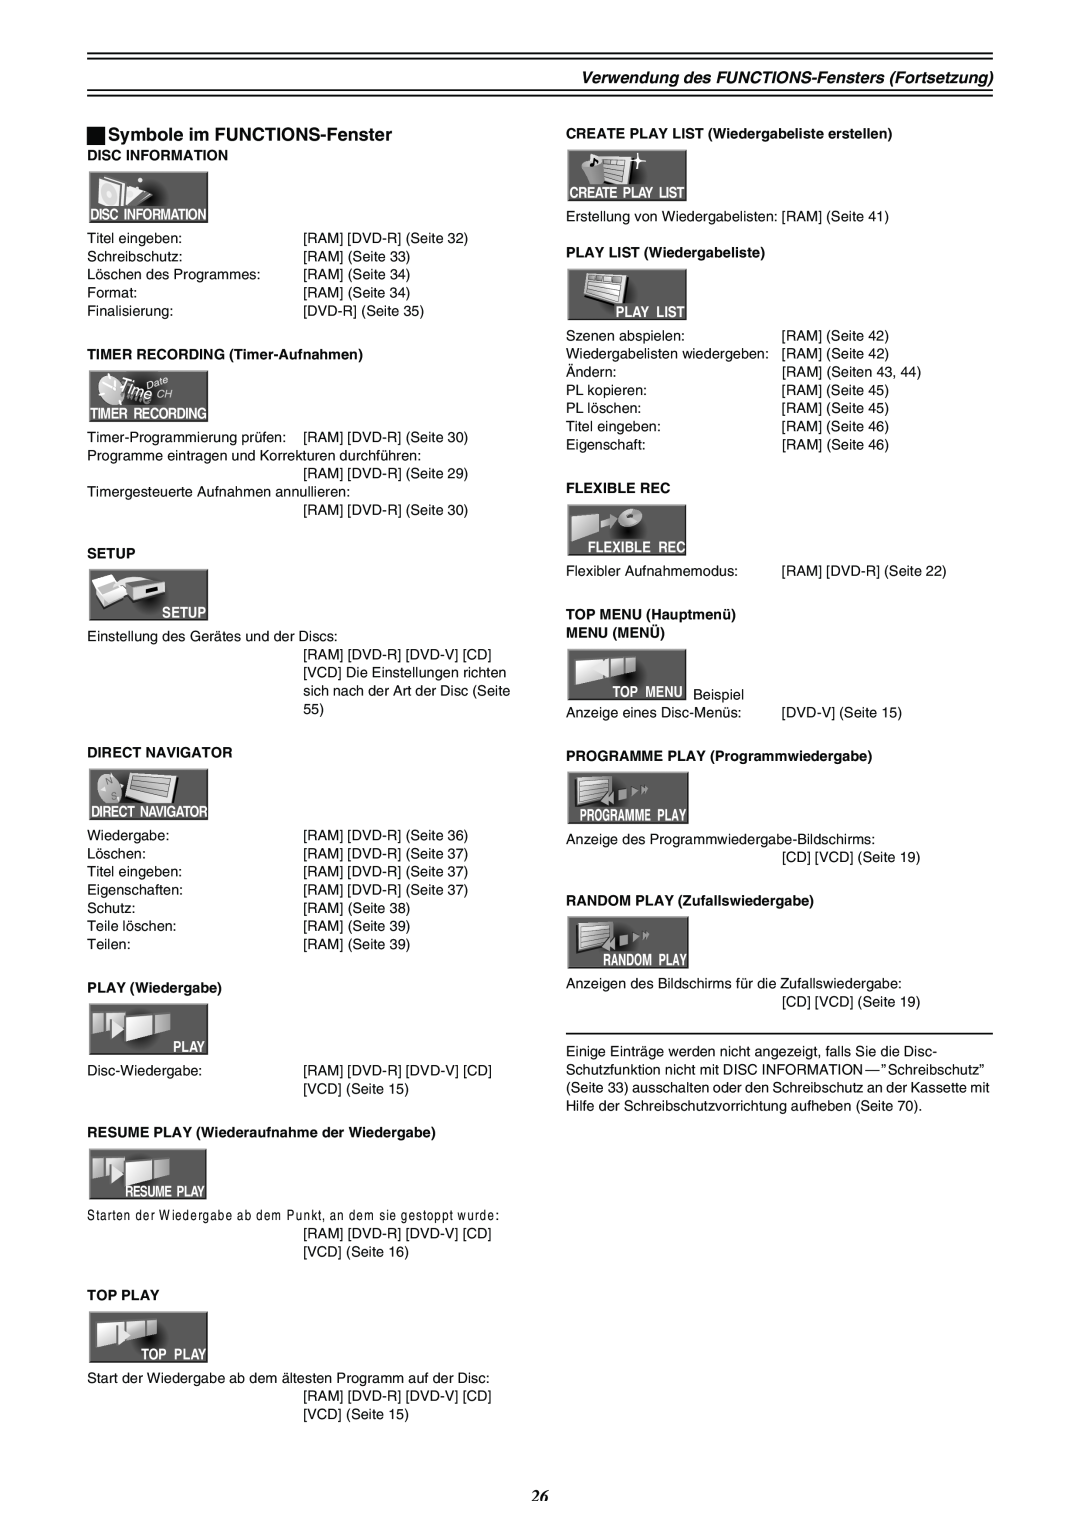 Panasonic DMR-E30 manual ªSymbole im FUNCTIONS-Fenster, Disc Information, Timer Recording, Setup, Resume Play, Top Play 